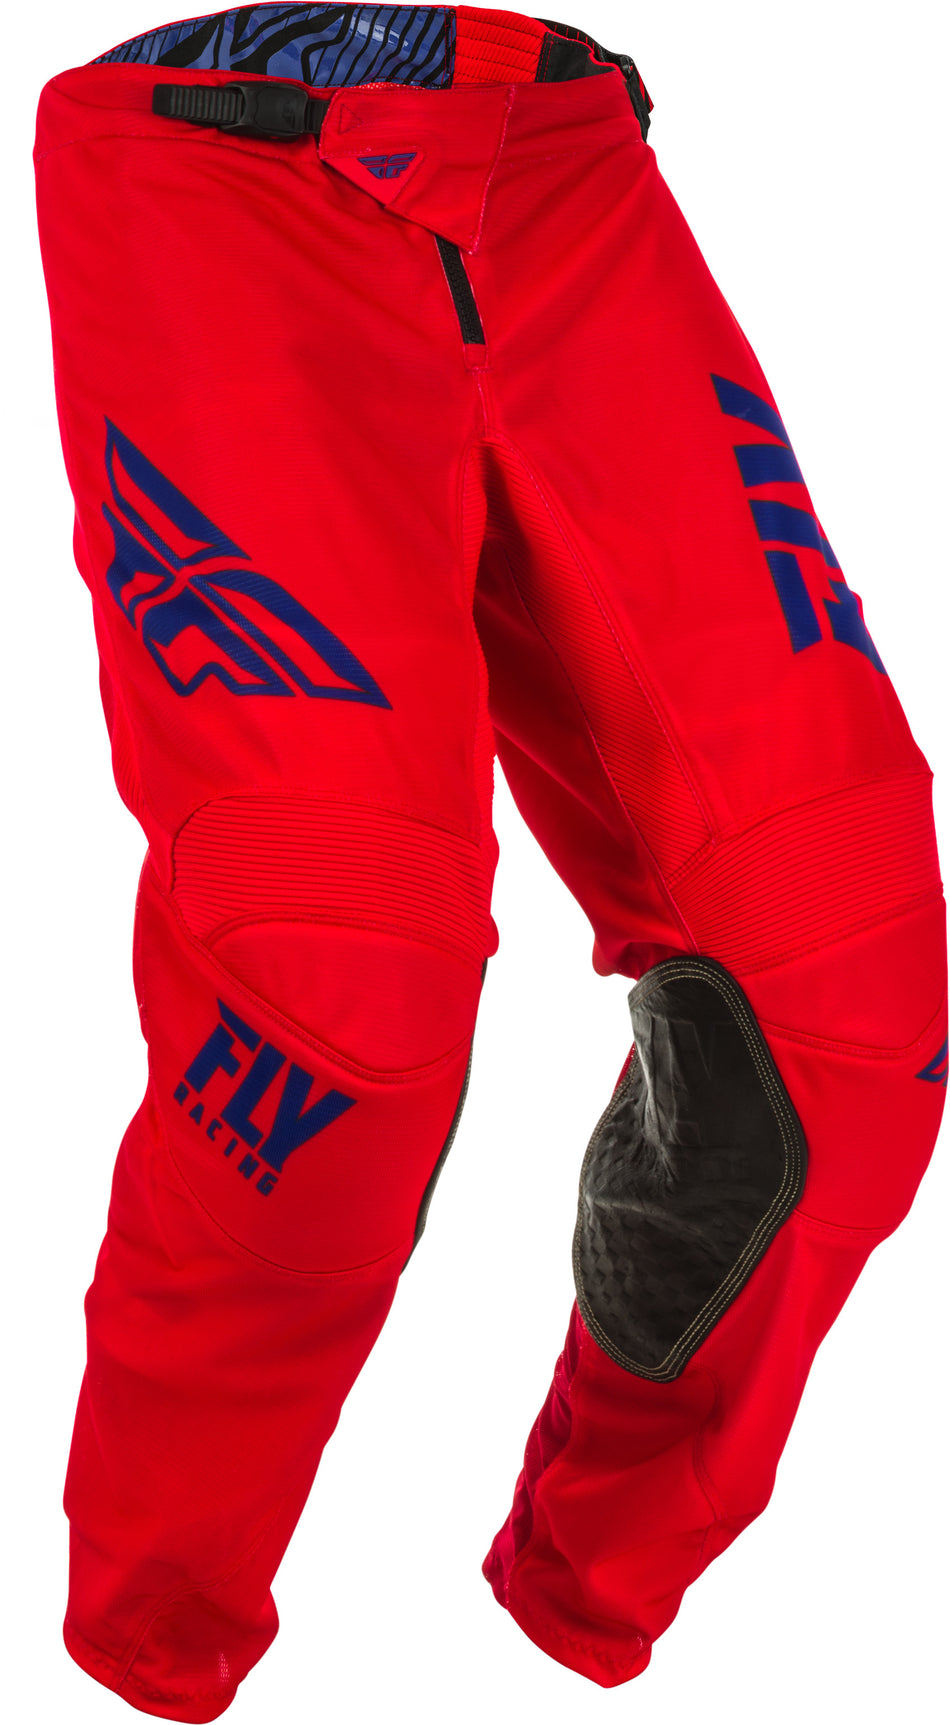 FLY RACING Kinetic Mesh Shield Pants Red/Blue Sz 40 373-32240